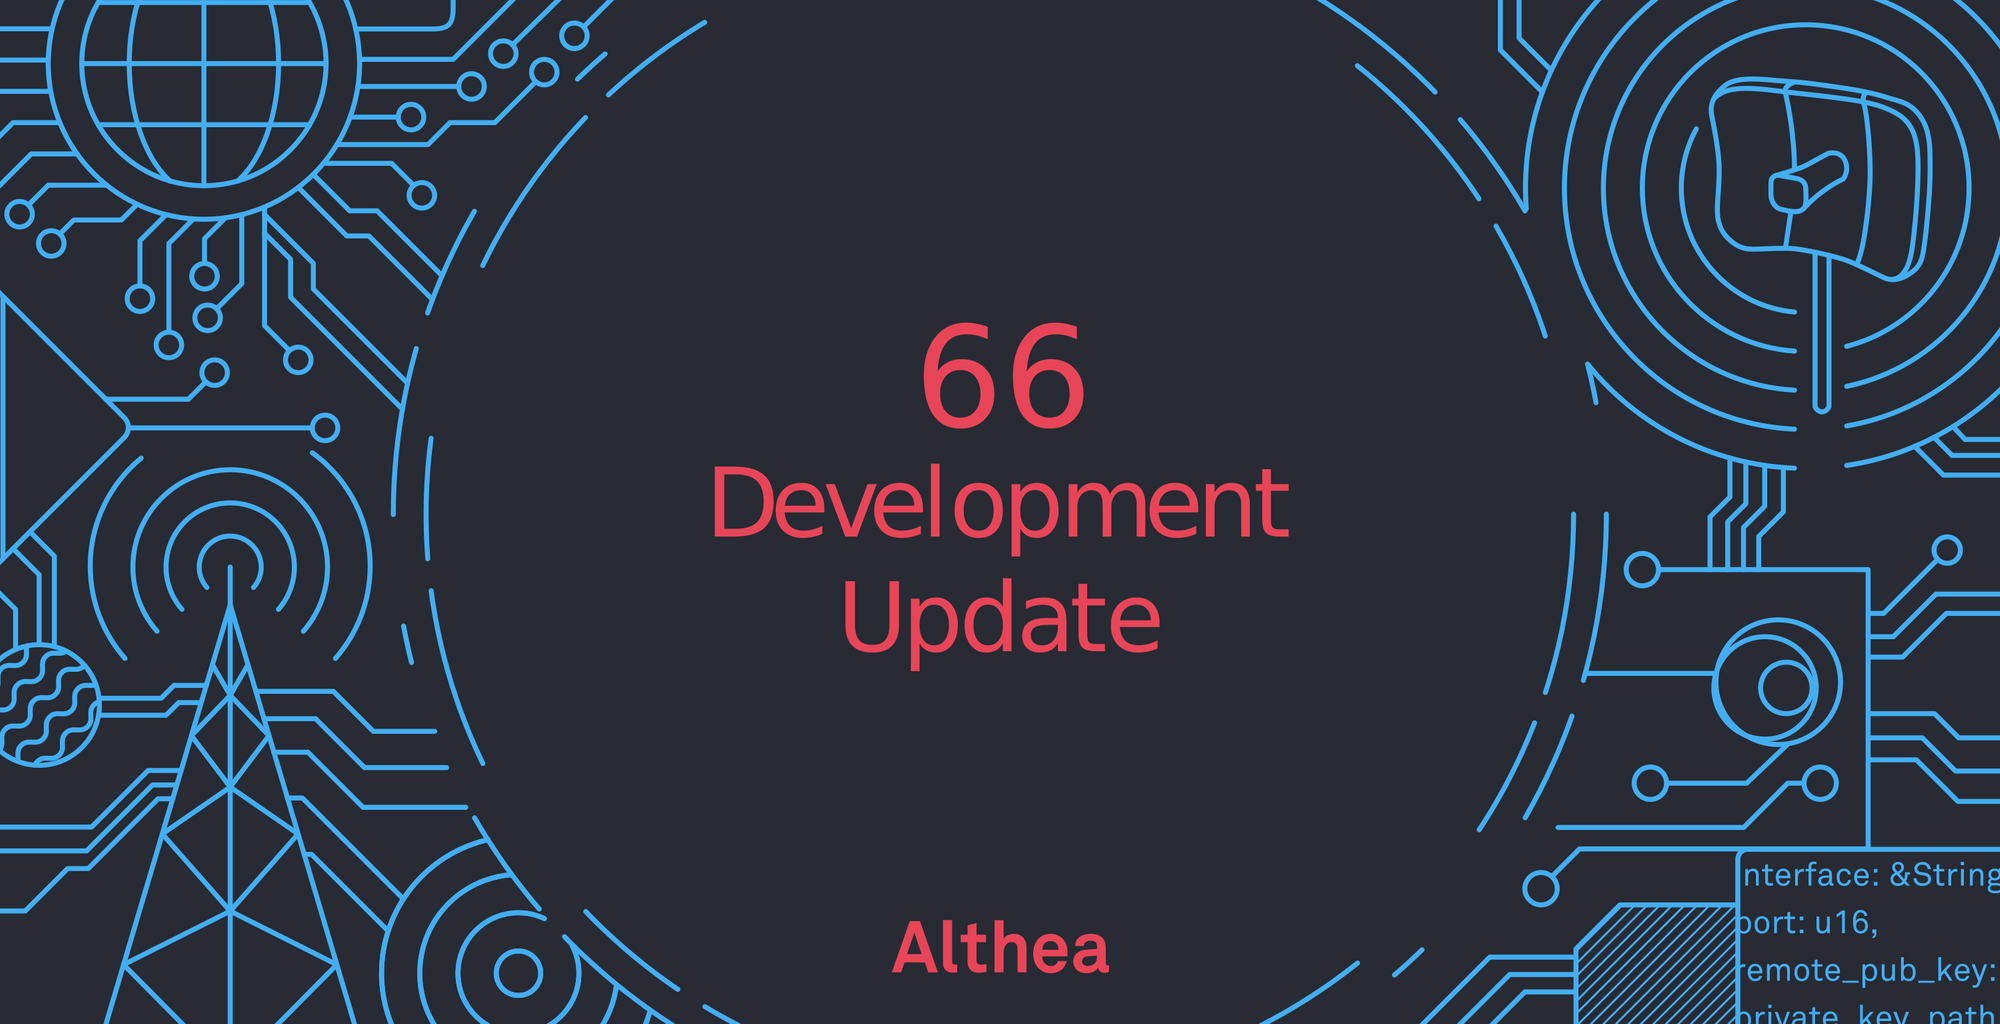 Althea Development Update #66: New dashboard, exit redundancy